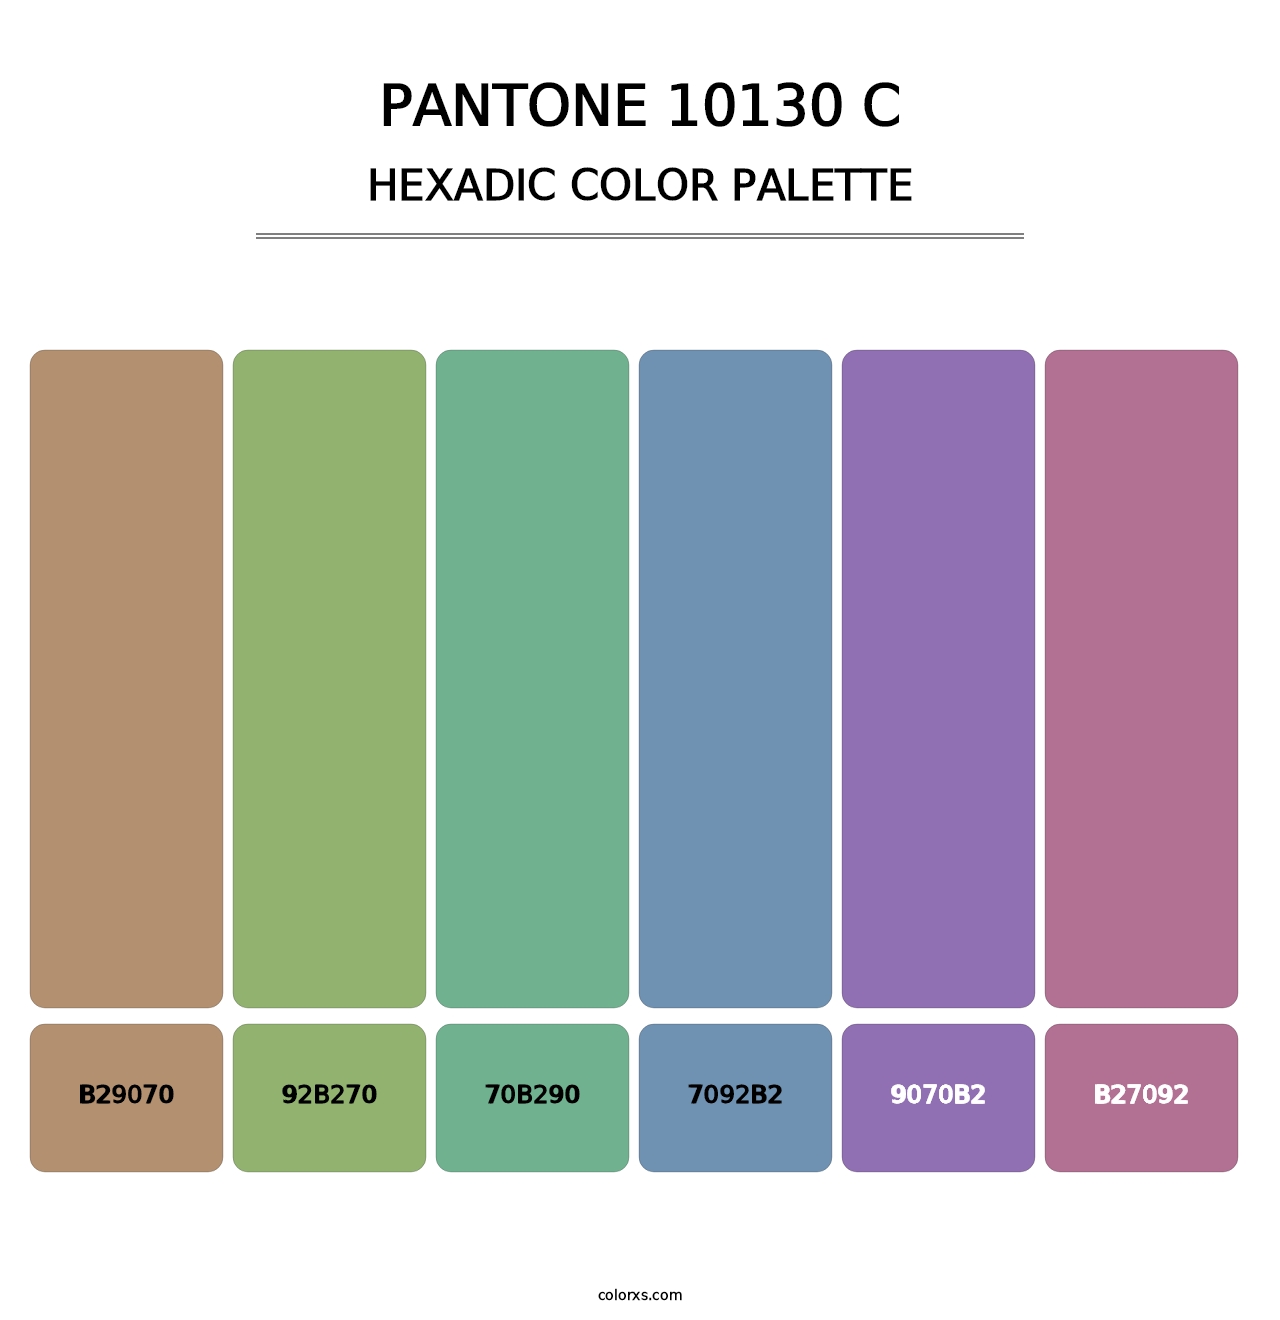 PANTONE 10130 C - Hexadic Color Palette